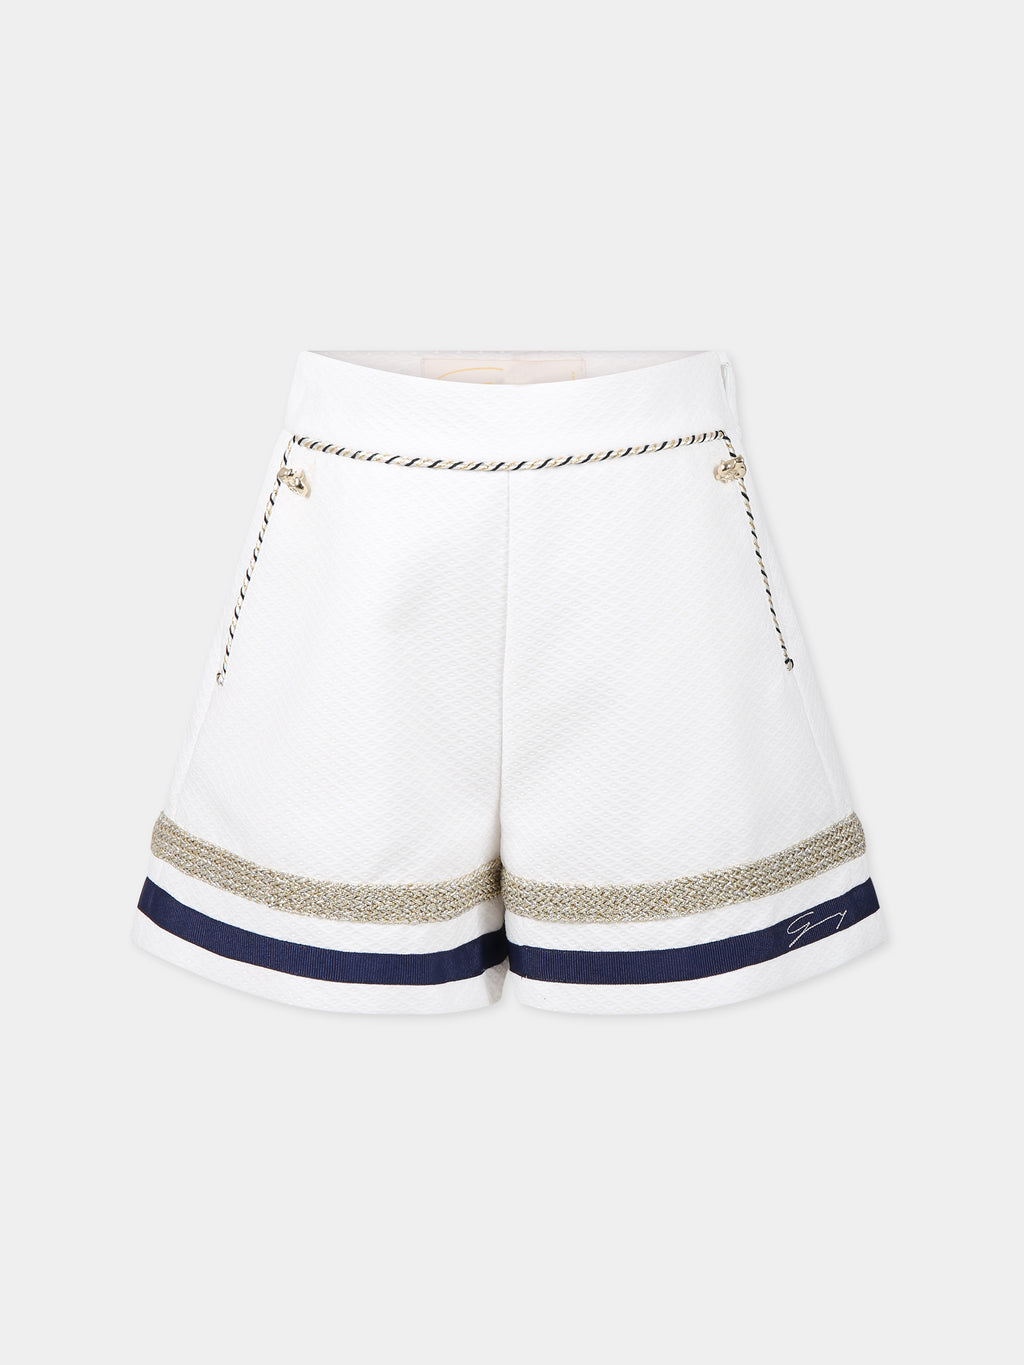 Shorts bianchi per bambina con dettagli blu e lurex